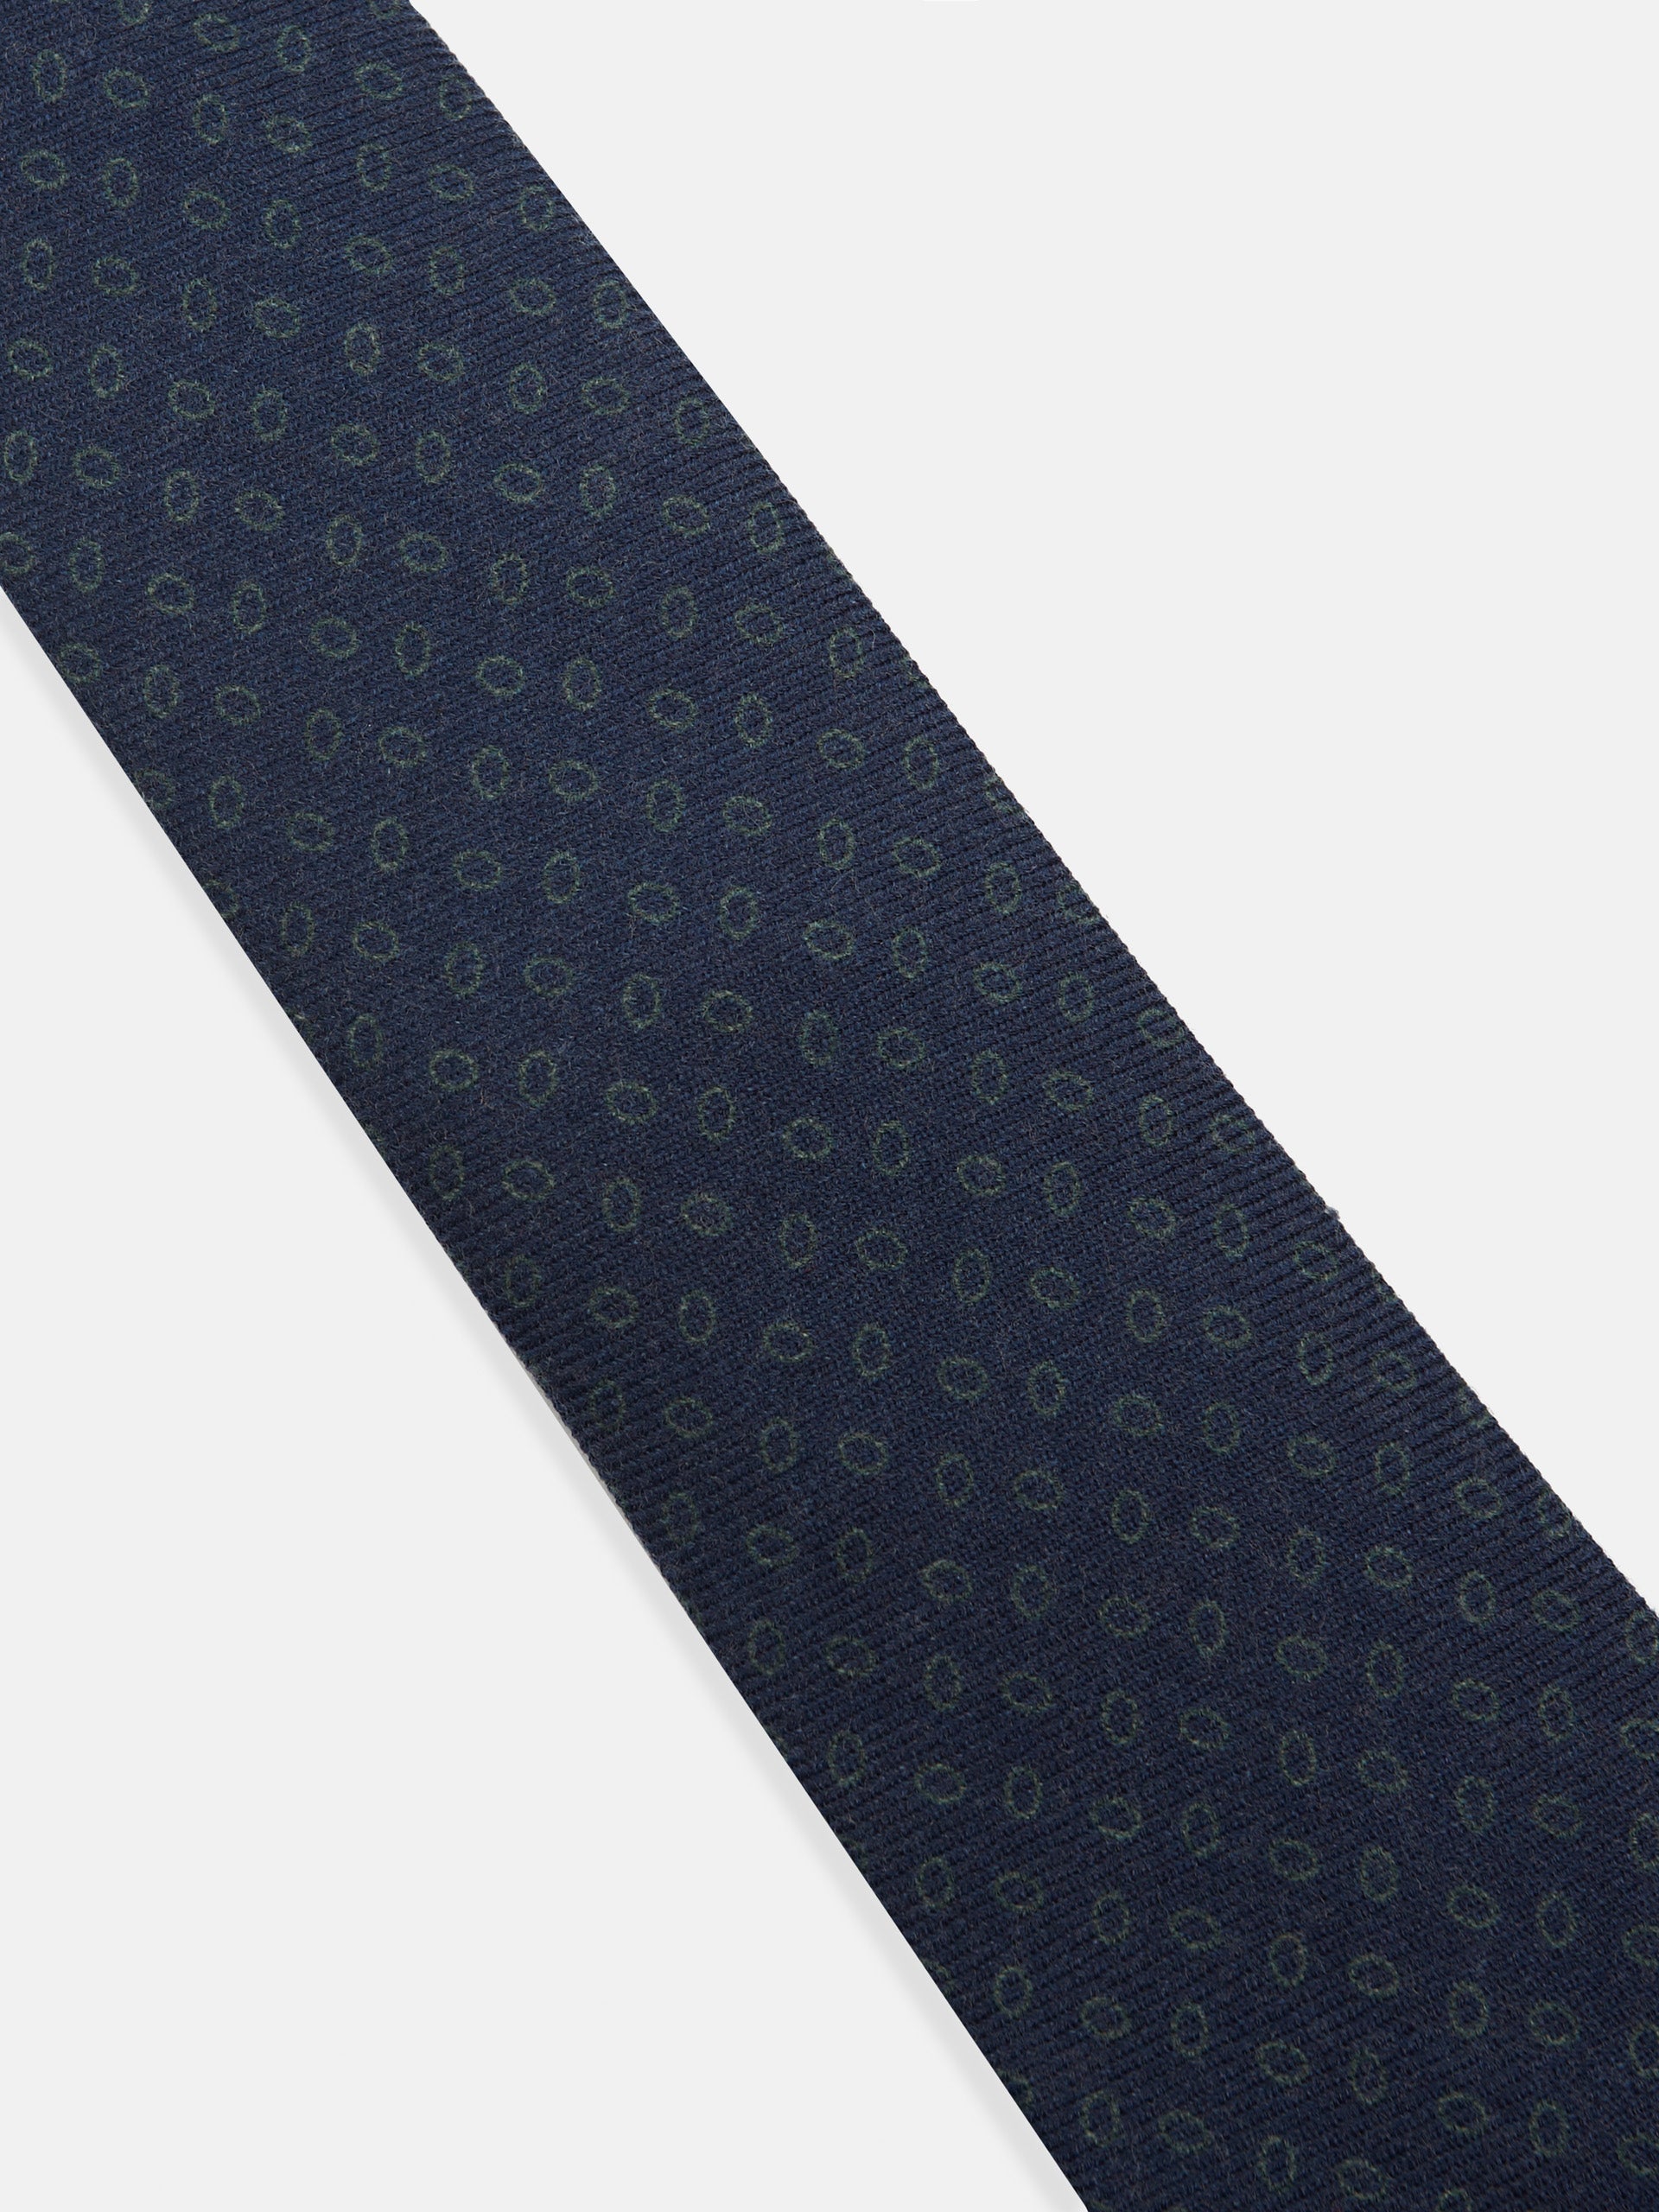 Cravate icônes irrégulières bleu marine